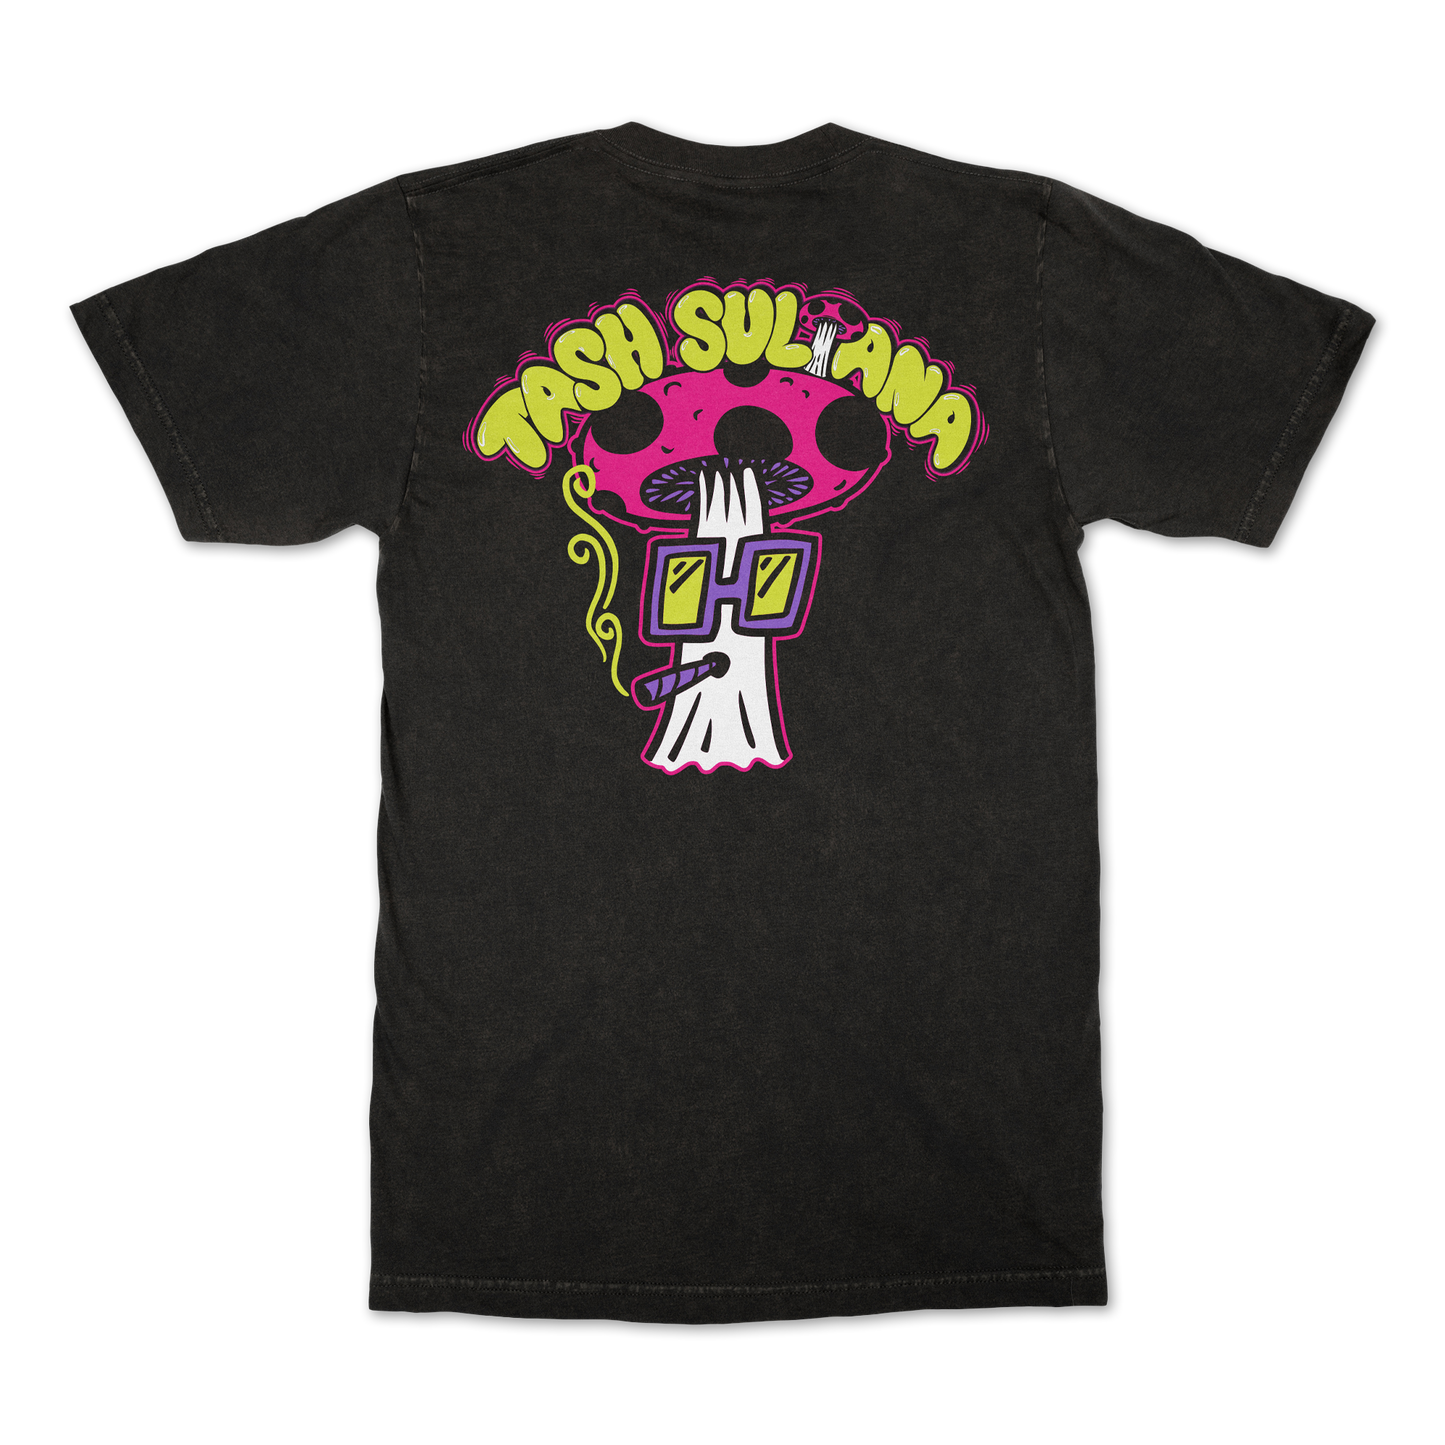 Sugar [MINERAL WASH] T-shirt